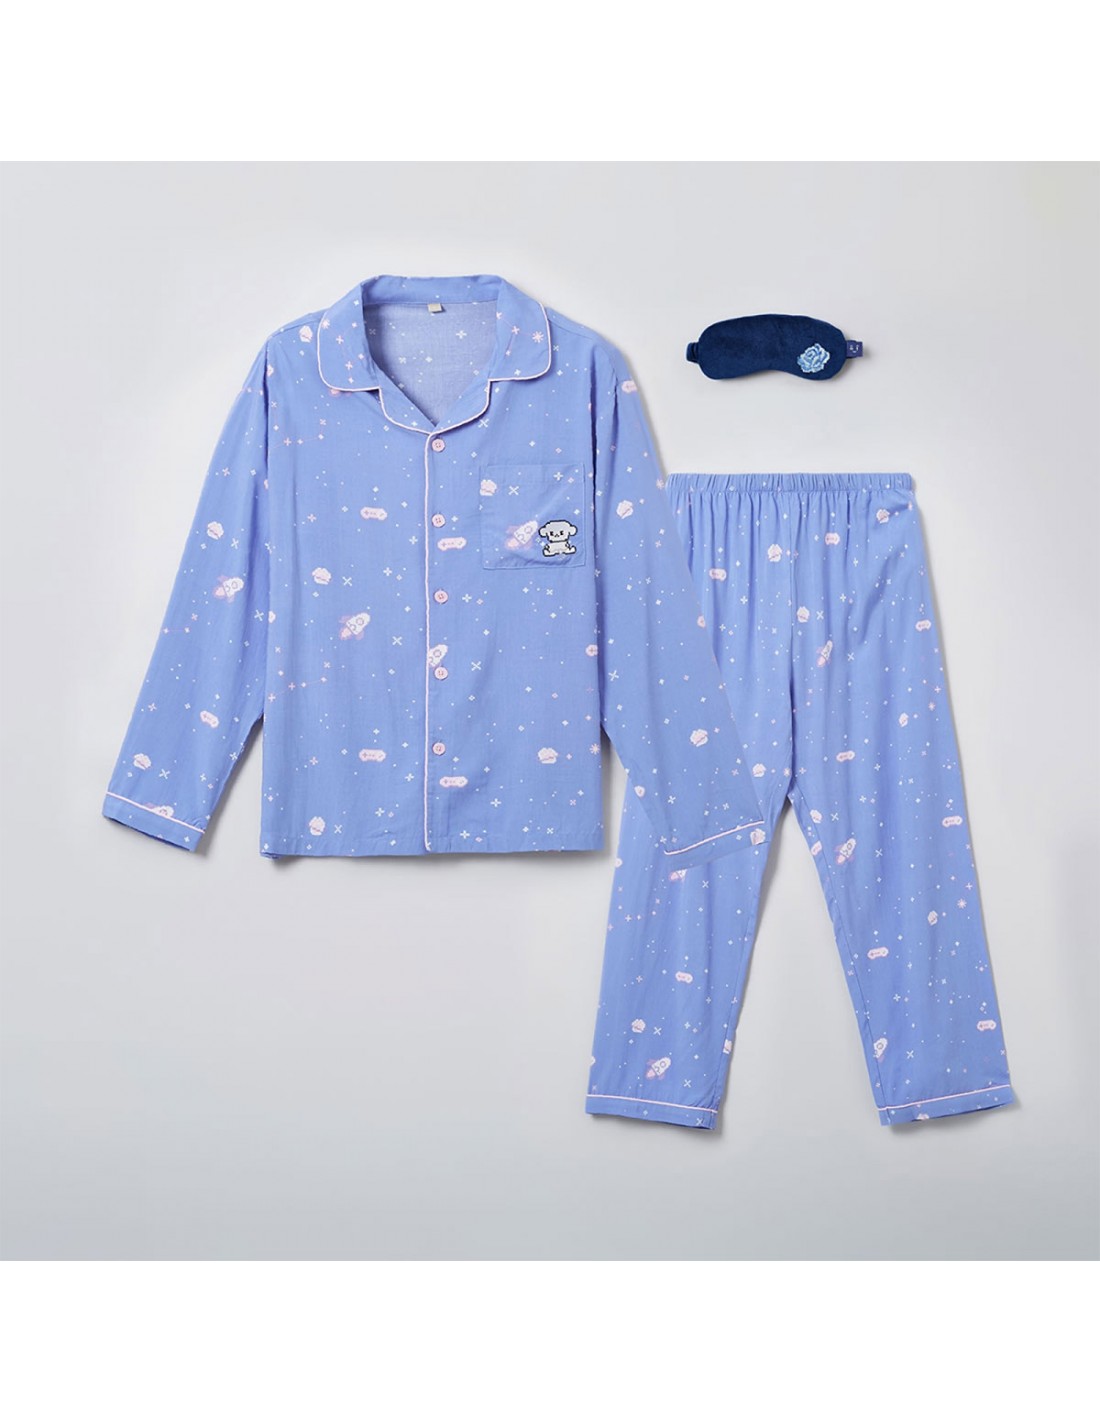 ZEROBASEONE x SPAO Goods - Pajamas SET with Sleep Shade KIM GYU VIN (Virgo)